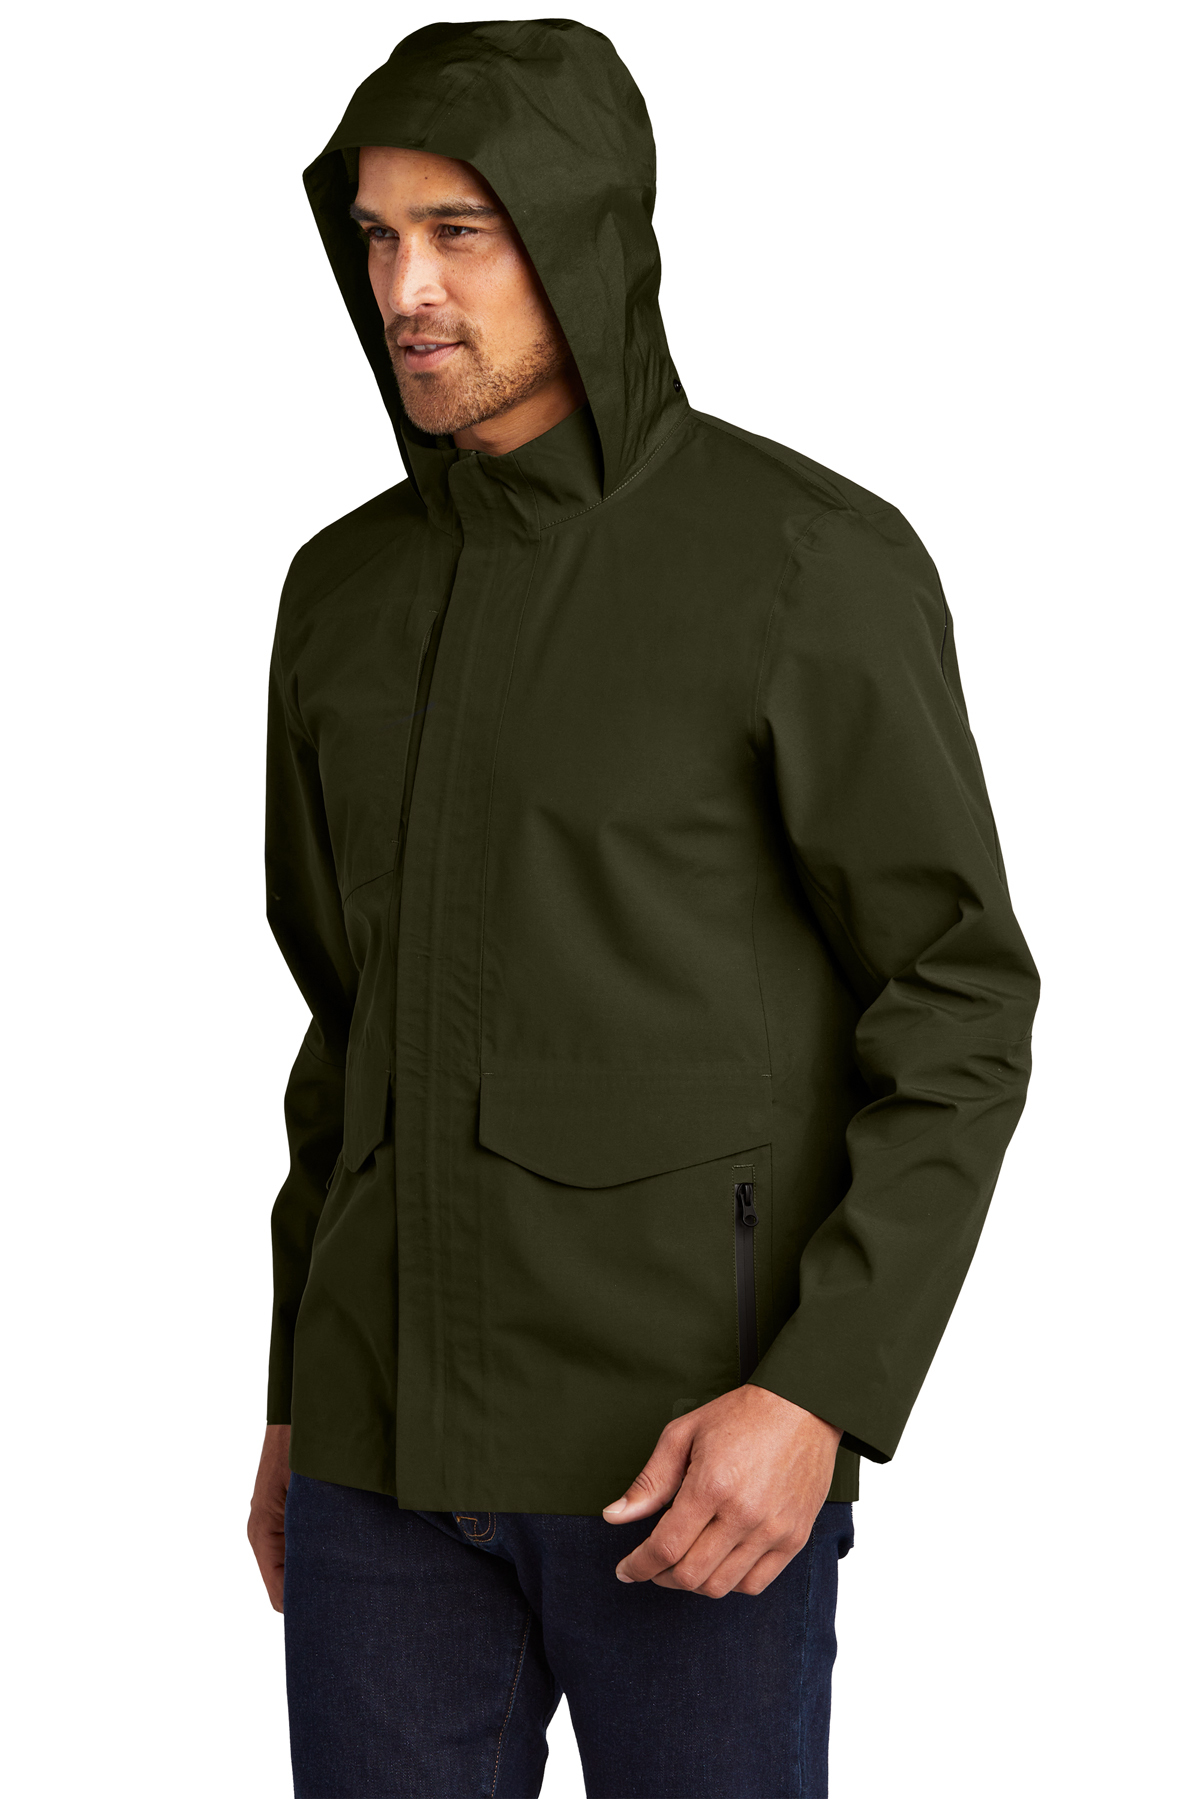 OGIO Utilitarian Jacket | Product | SanMar